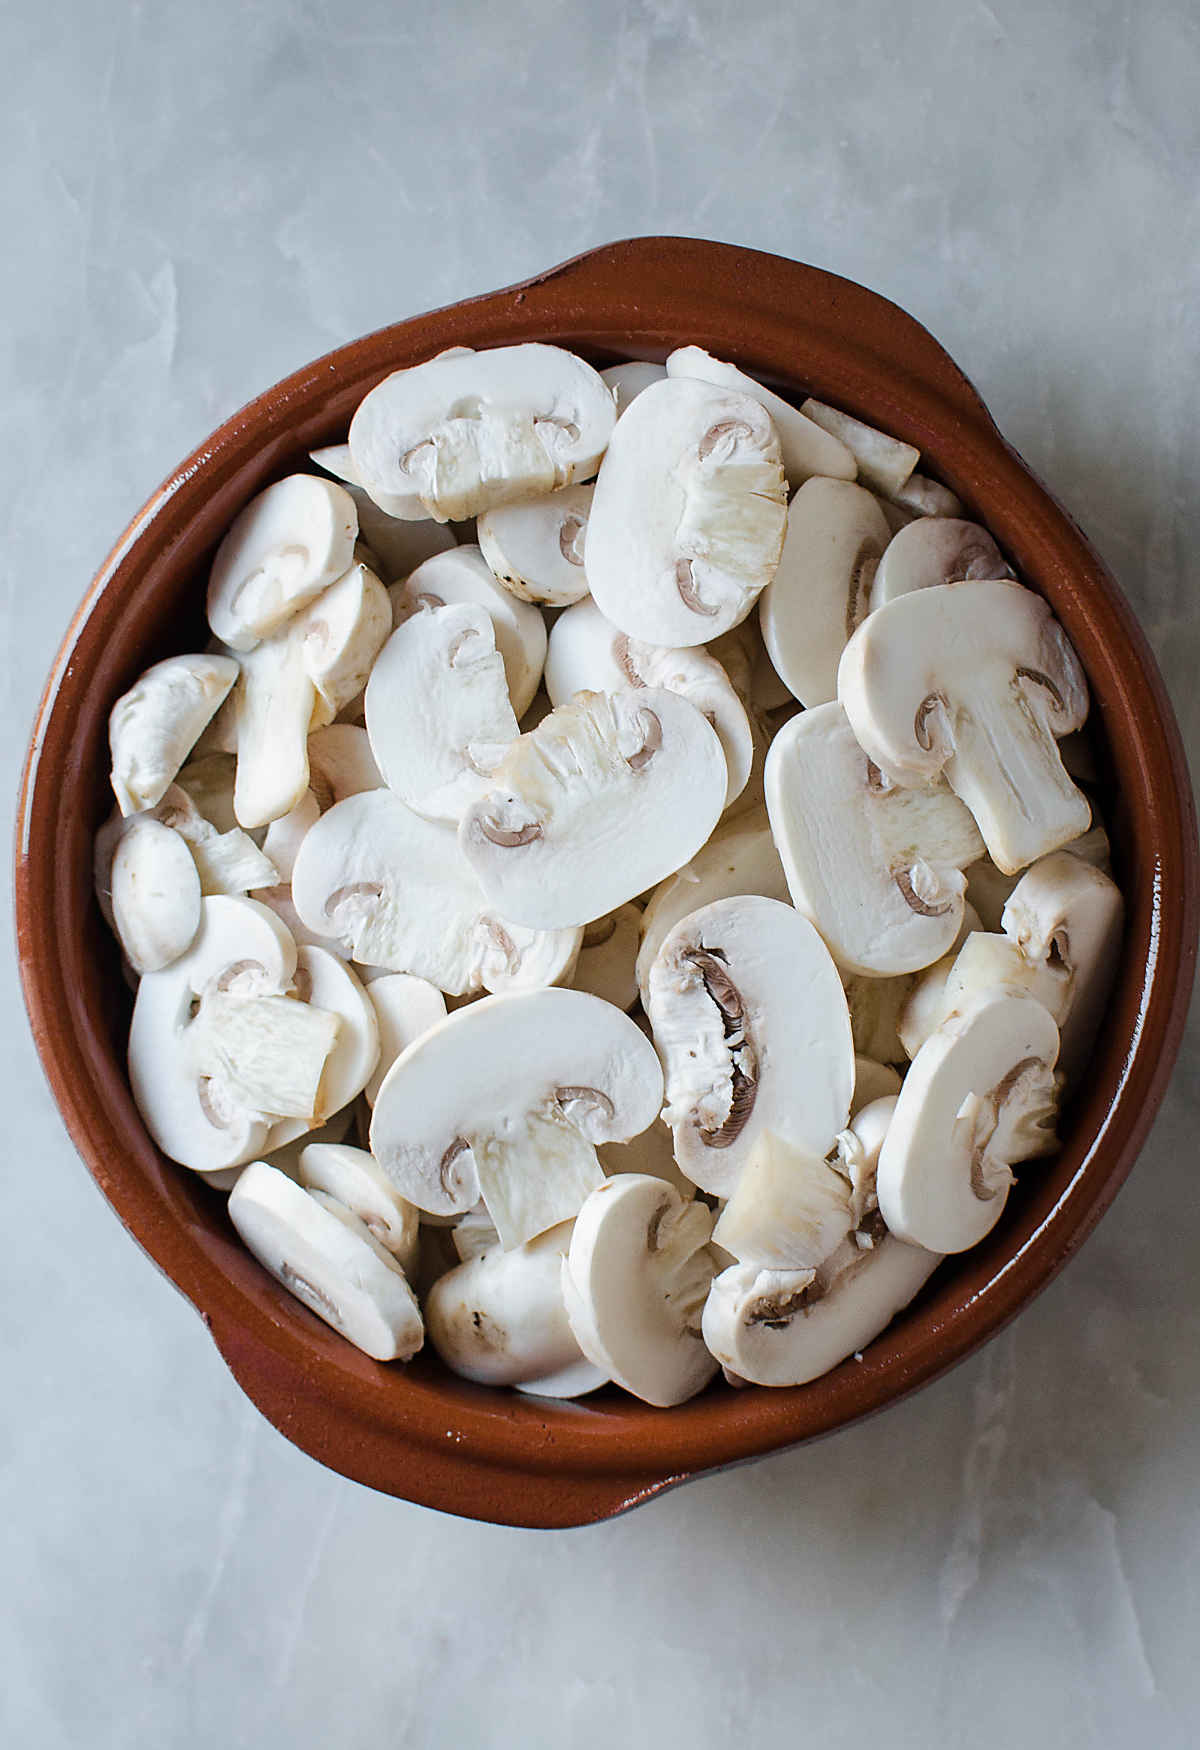 Sliced white button mushrooms fin a flat dish.